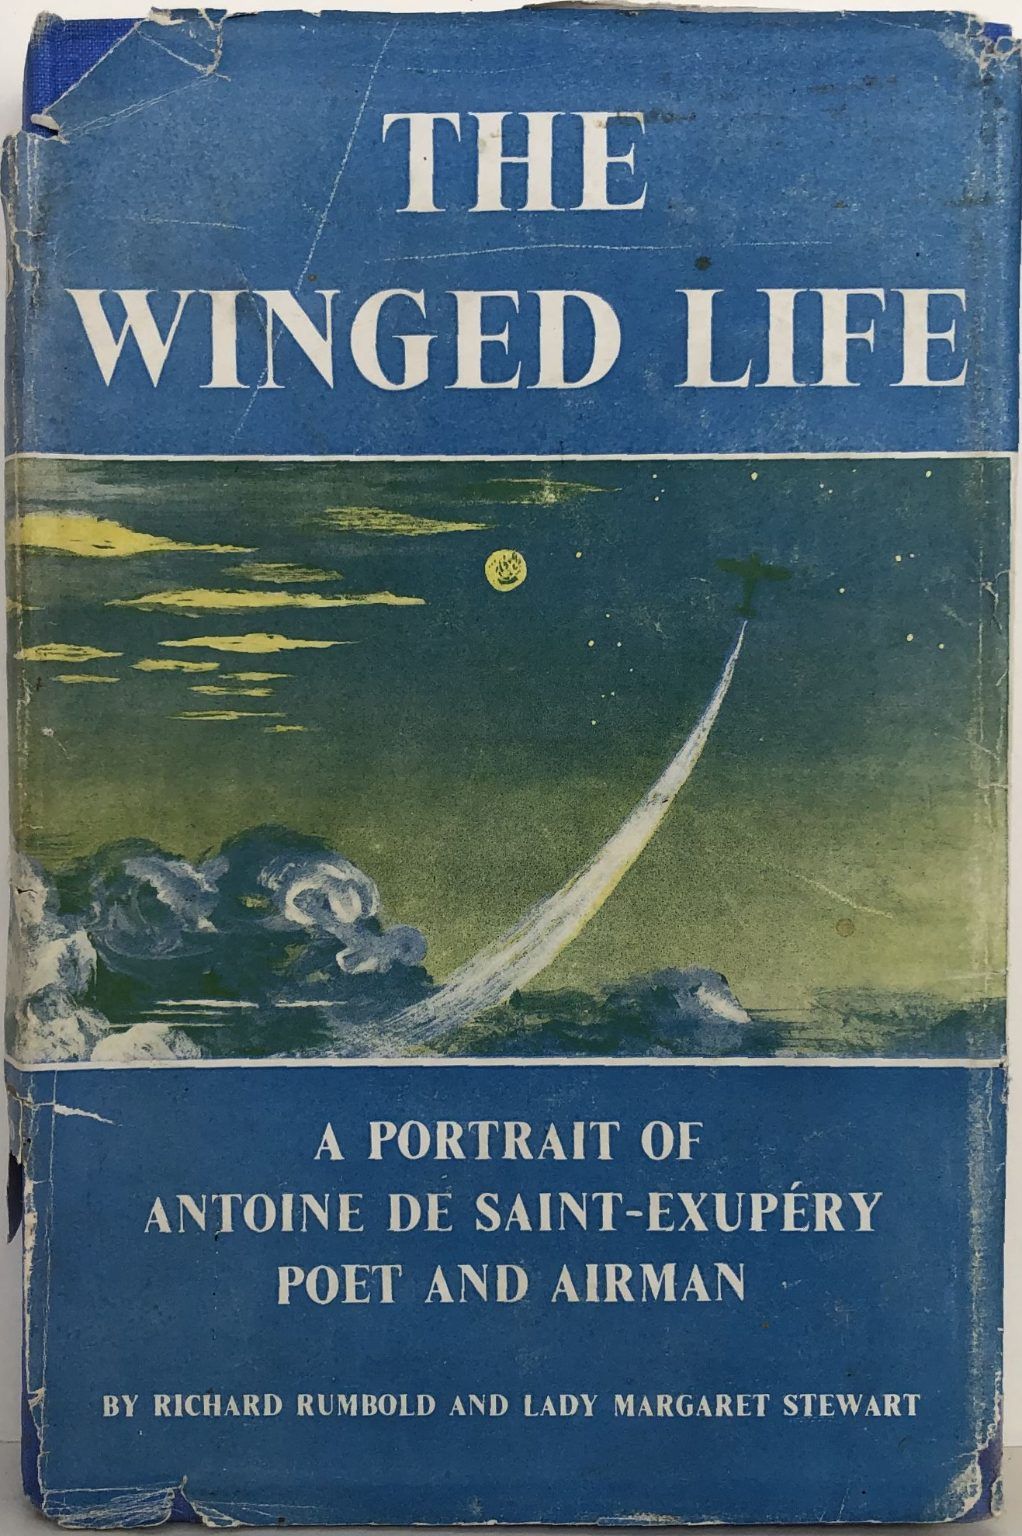 THE WINGED LIFE: A Portrait Of Antoine De Saint-Exupery Poet And Airman